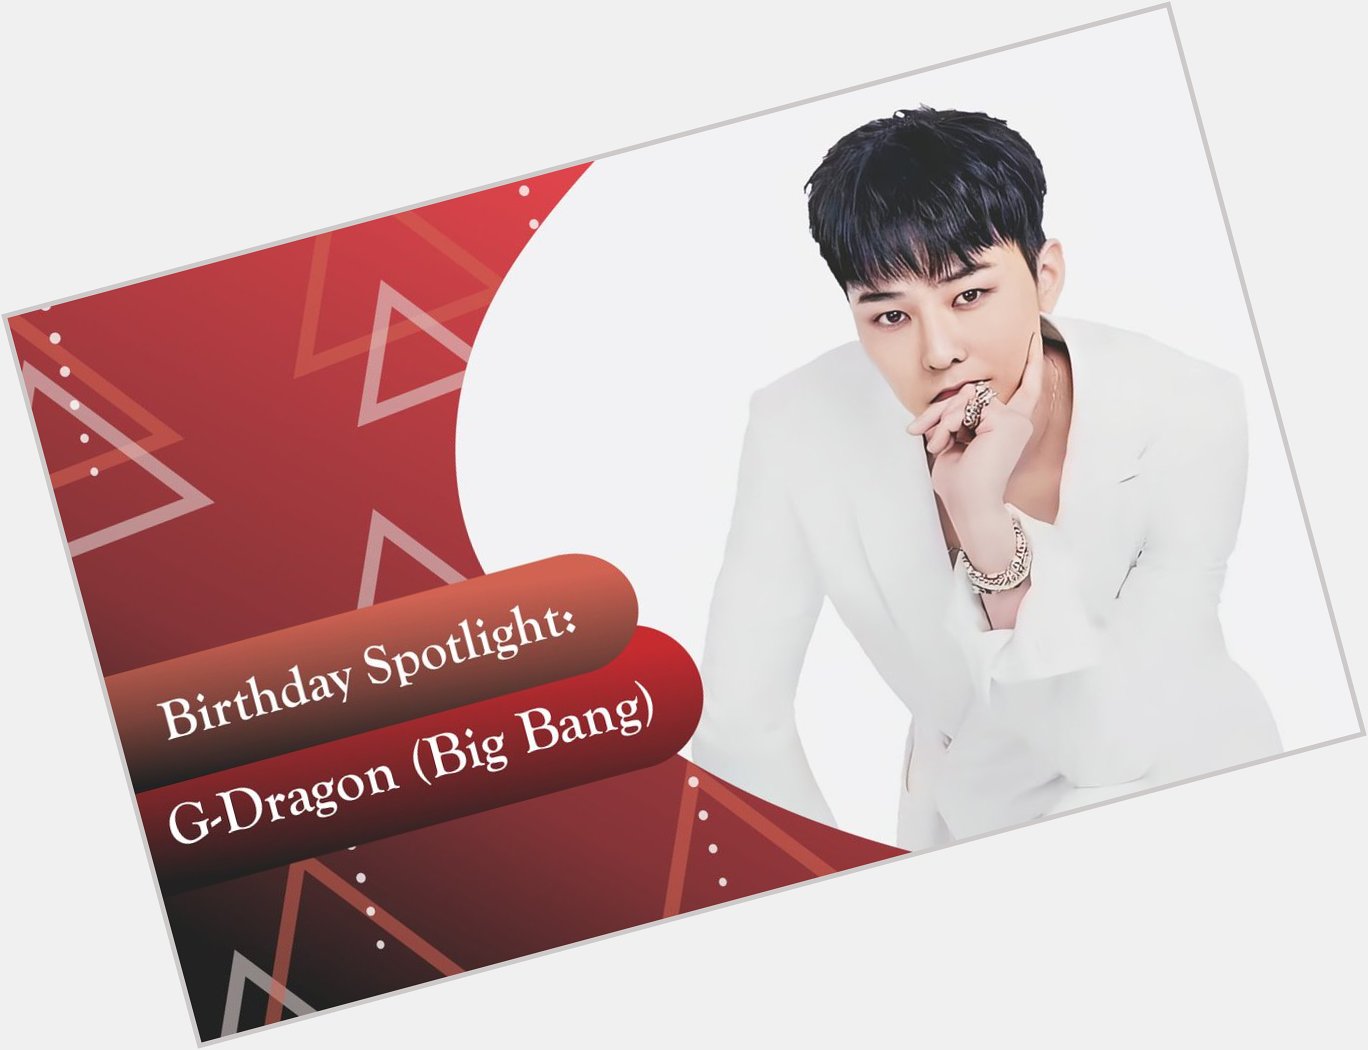 Birthday Spotlight: Happy G-Dragon Day  